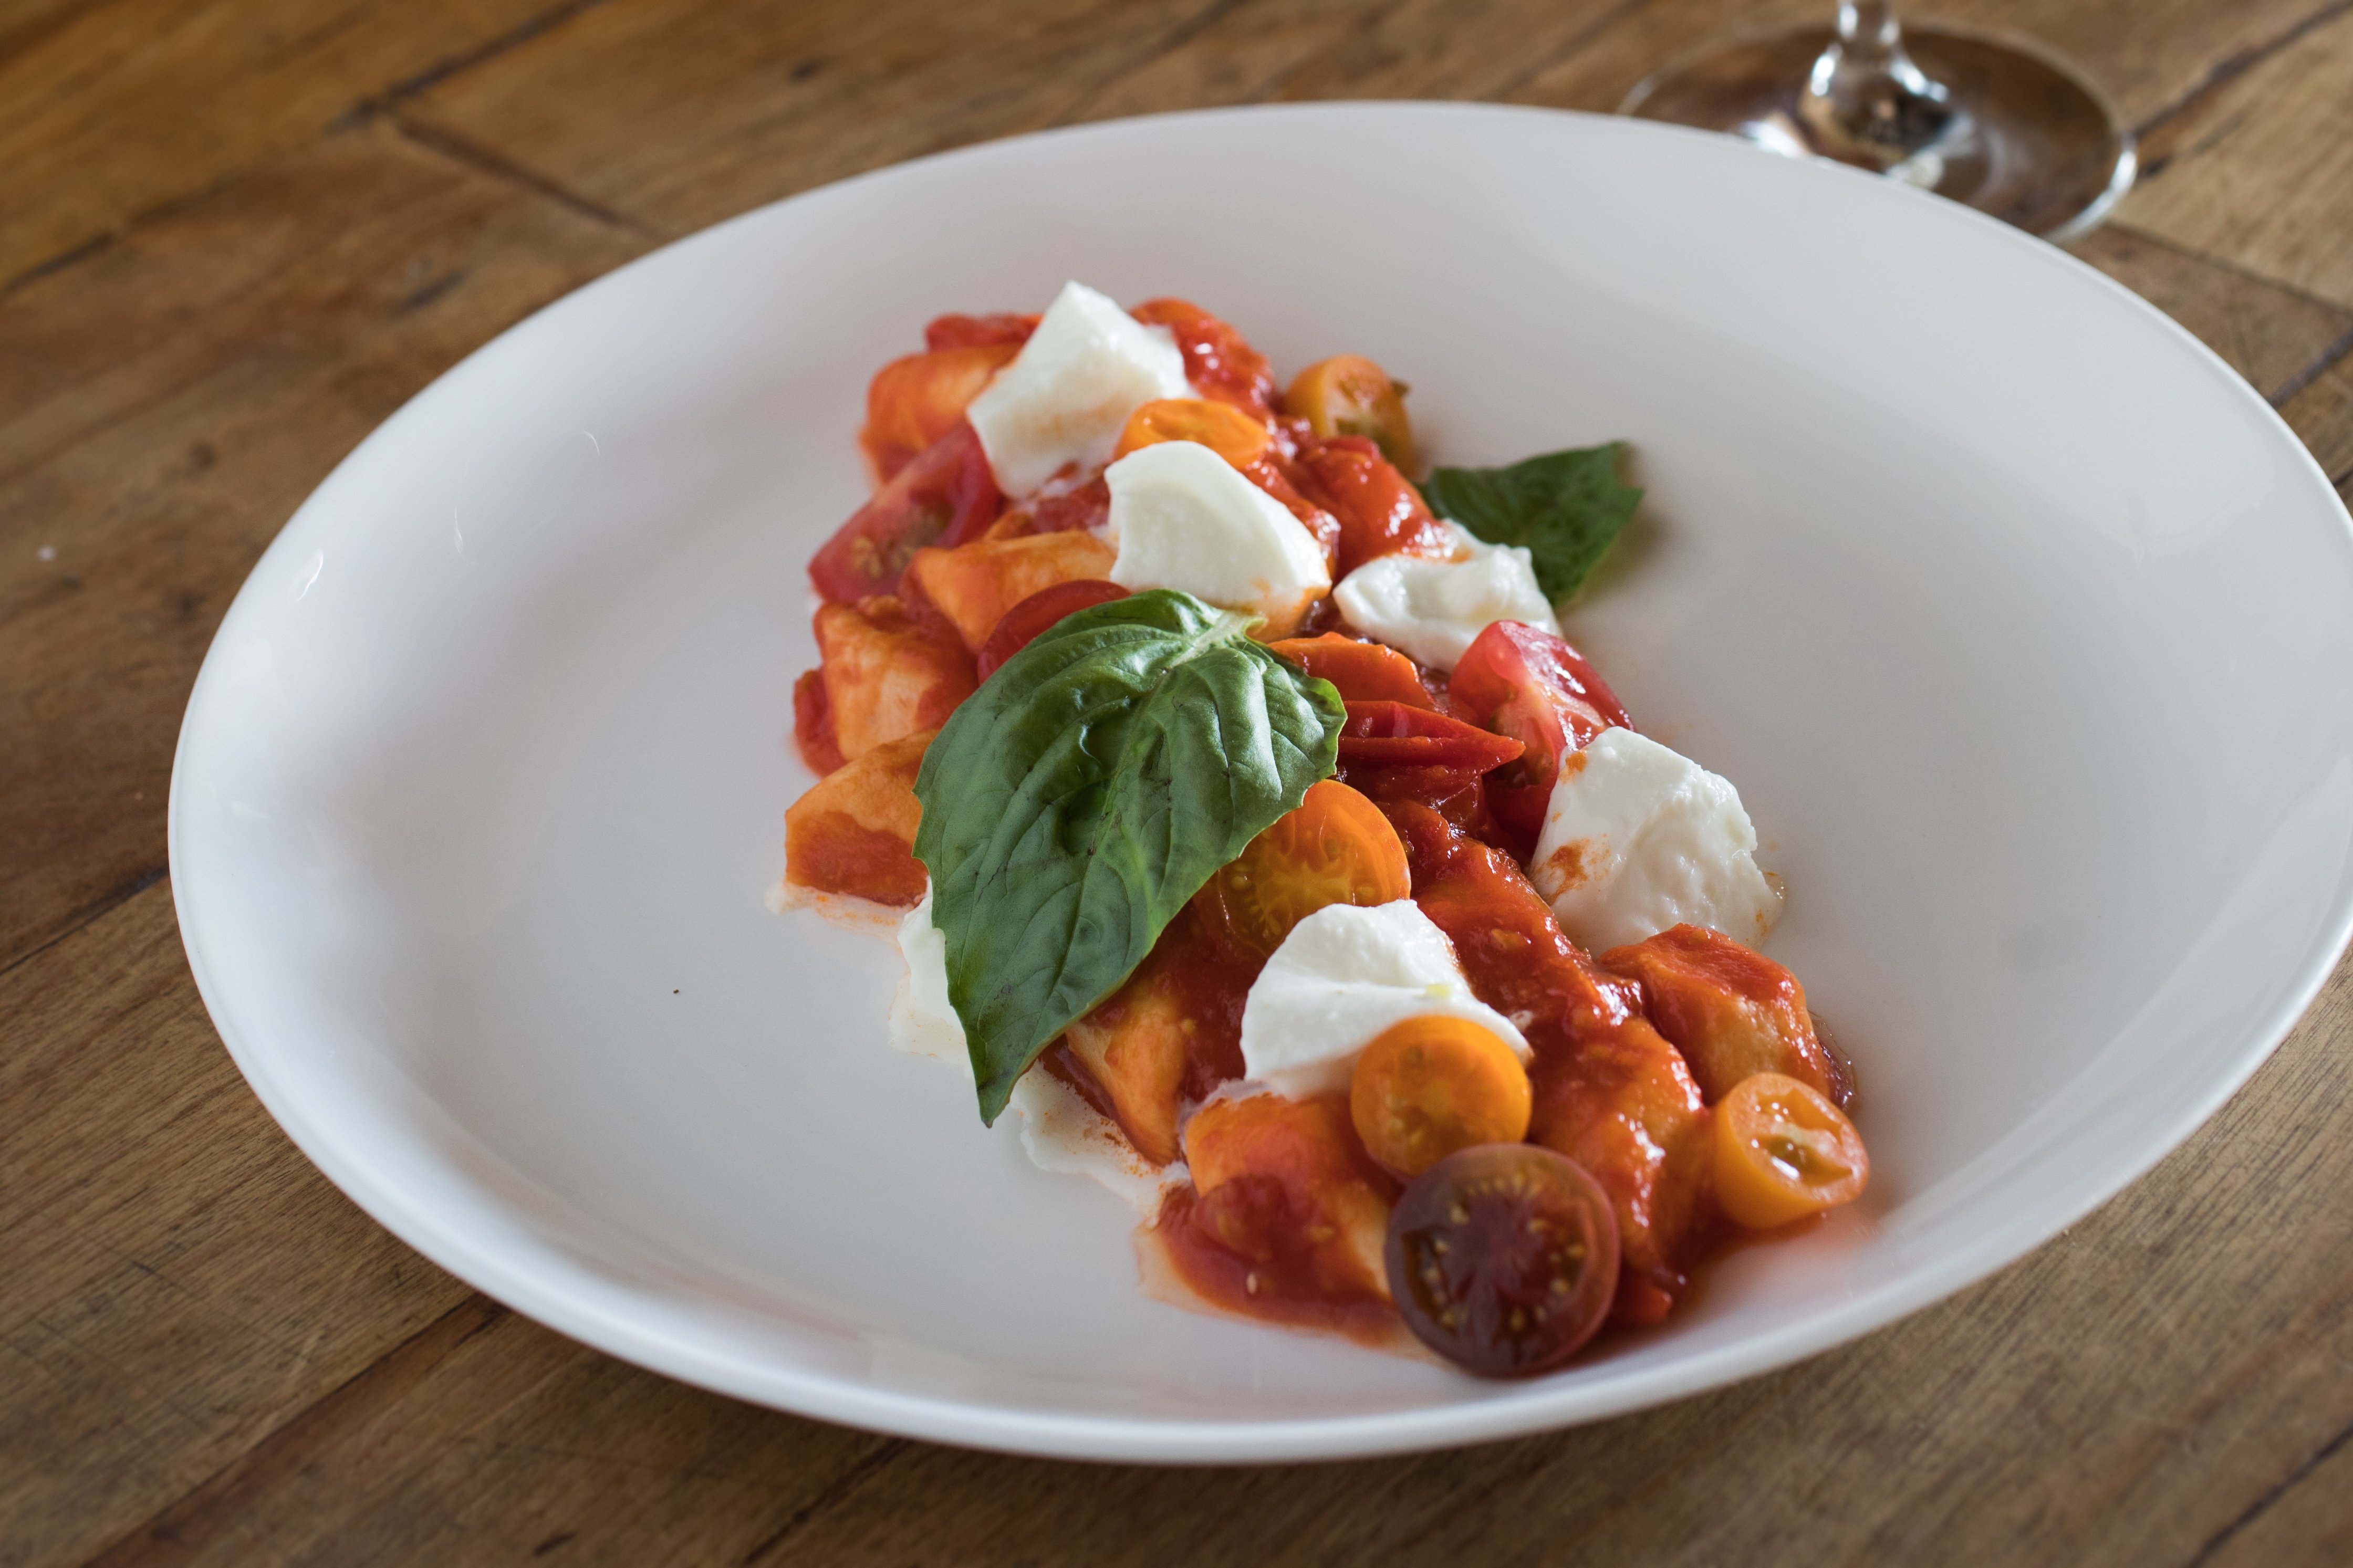 Bellwether Farm’s Ricotta Gnudi with Italian Cherry tomatoes